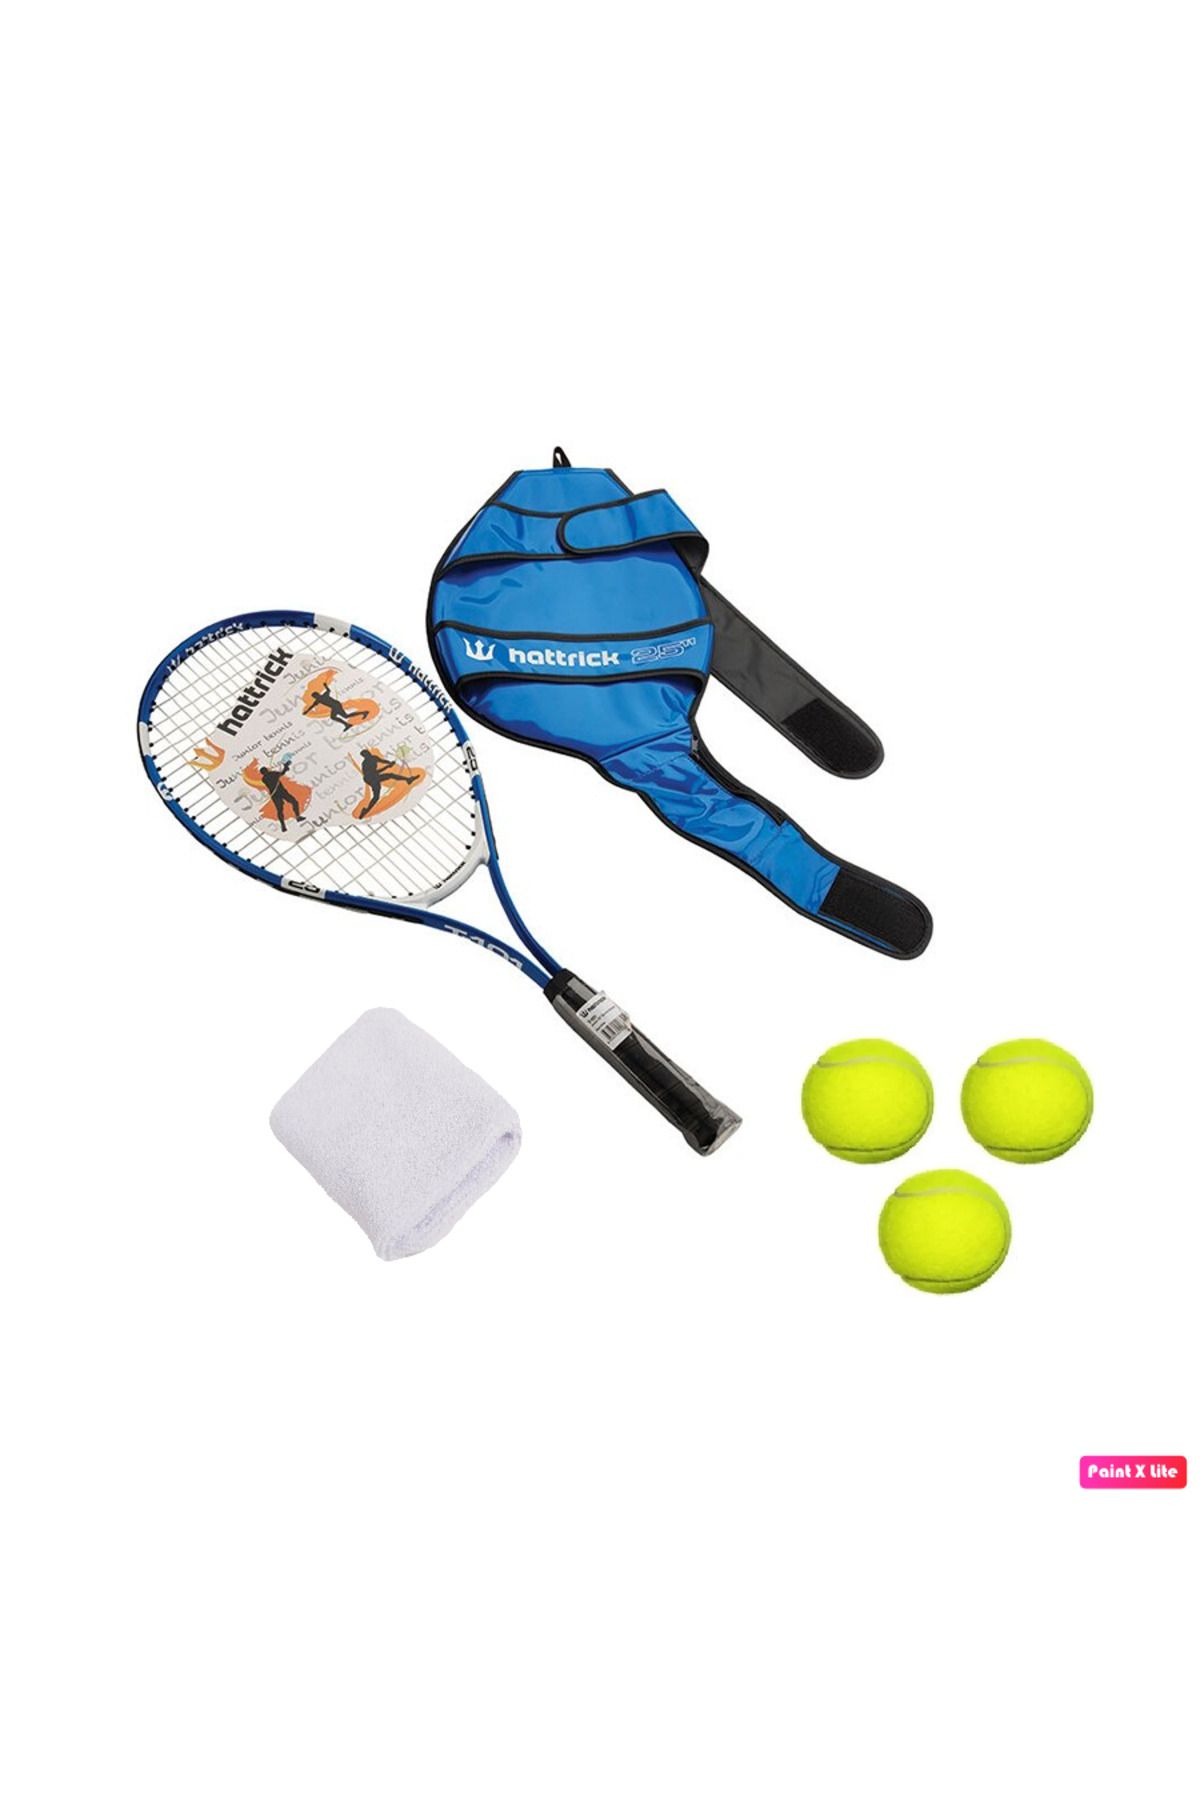 Hattrick T-101 25 inch 230 gr Çocuk Tenisçi Seti Tenis Raketi + 3 Adet Tenis Topu + Havlu Bileklik